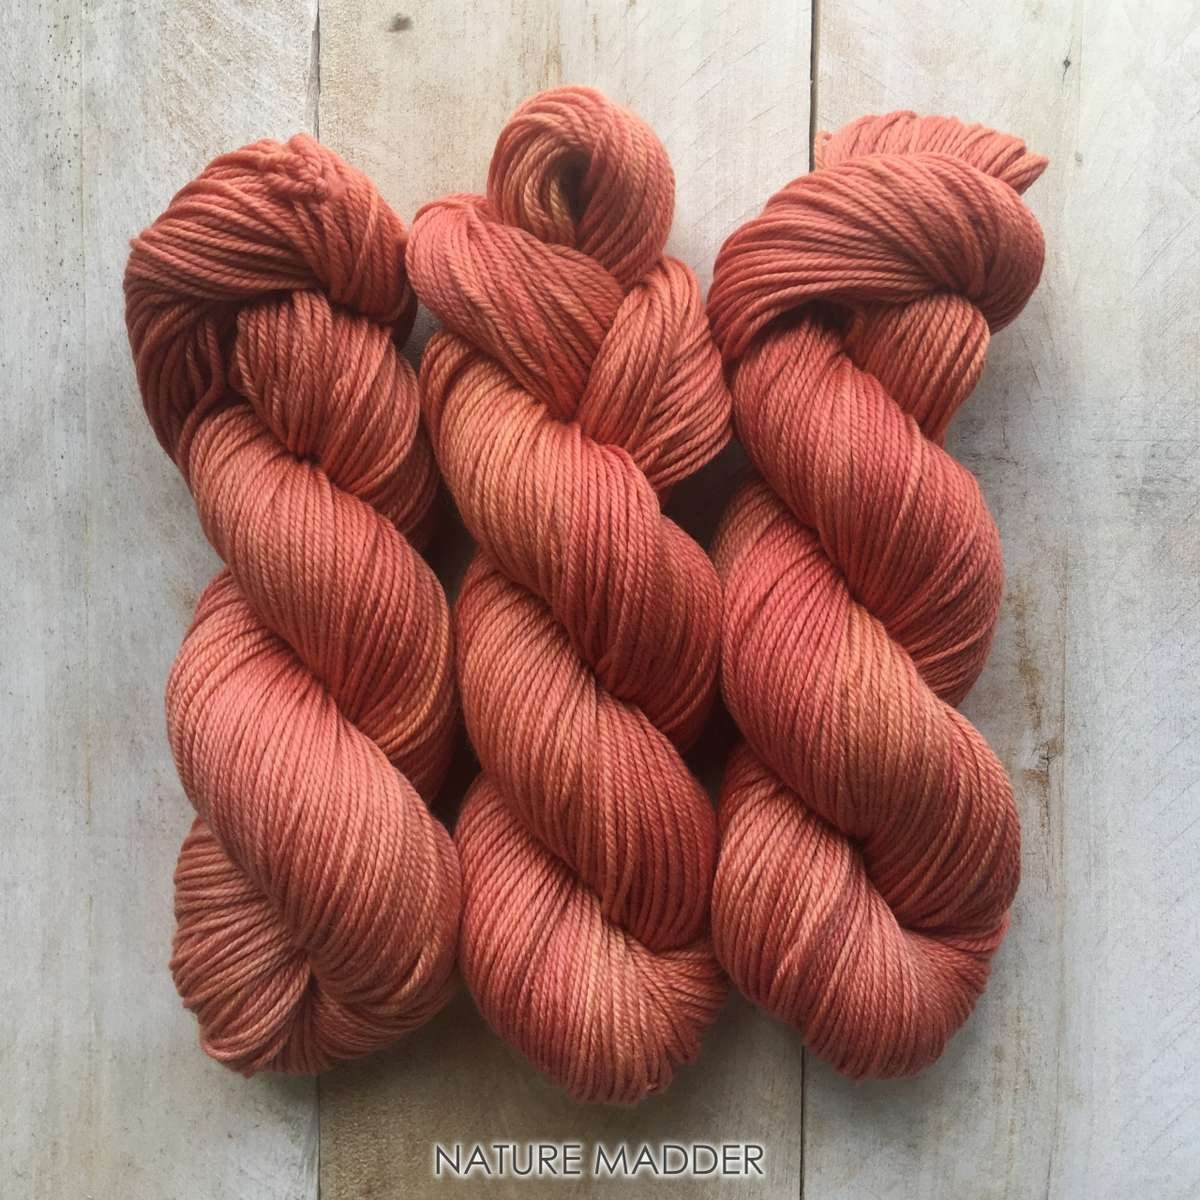 Hand-dyed yarn Louise Robert NATURE Madder